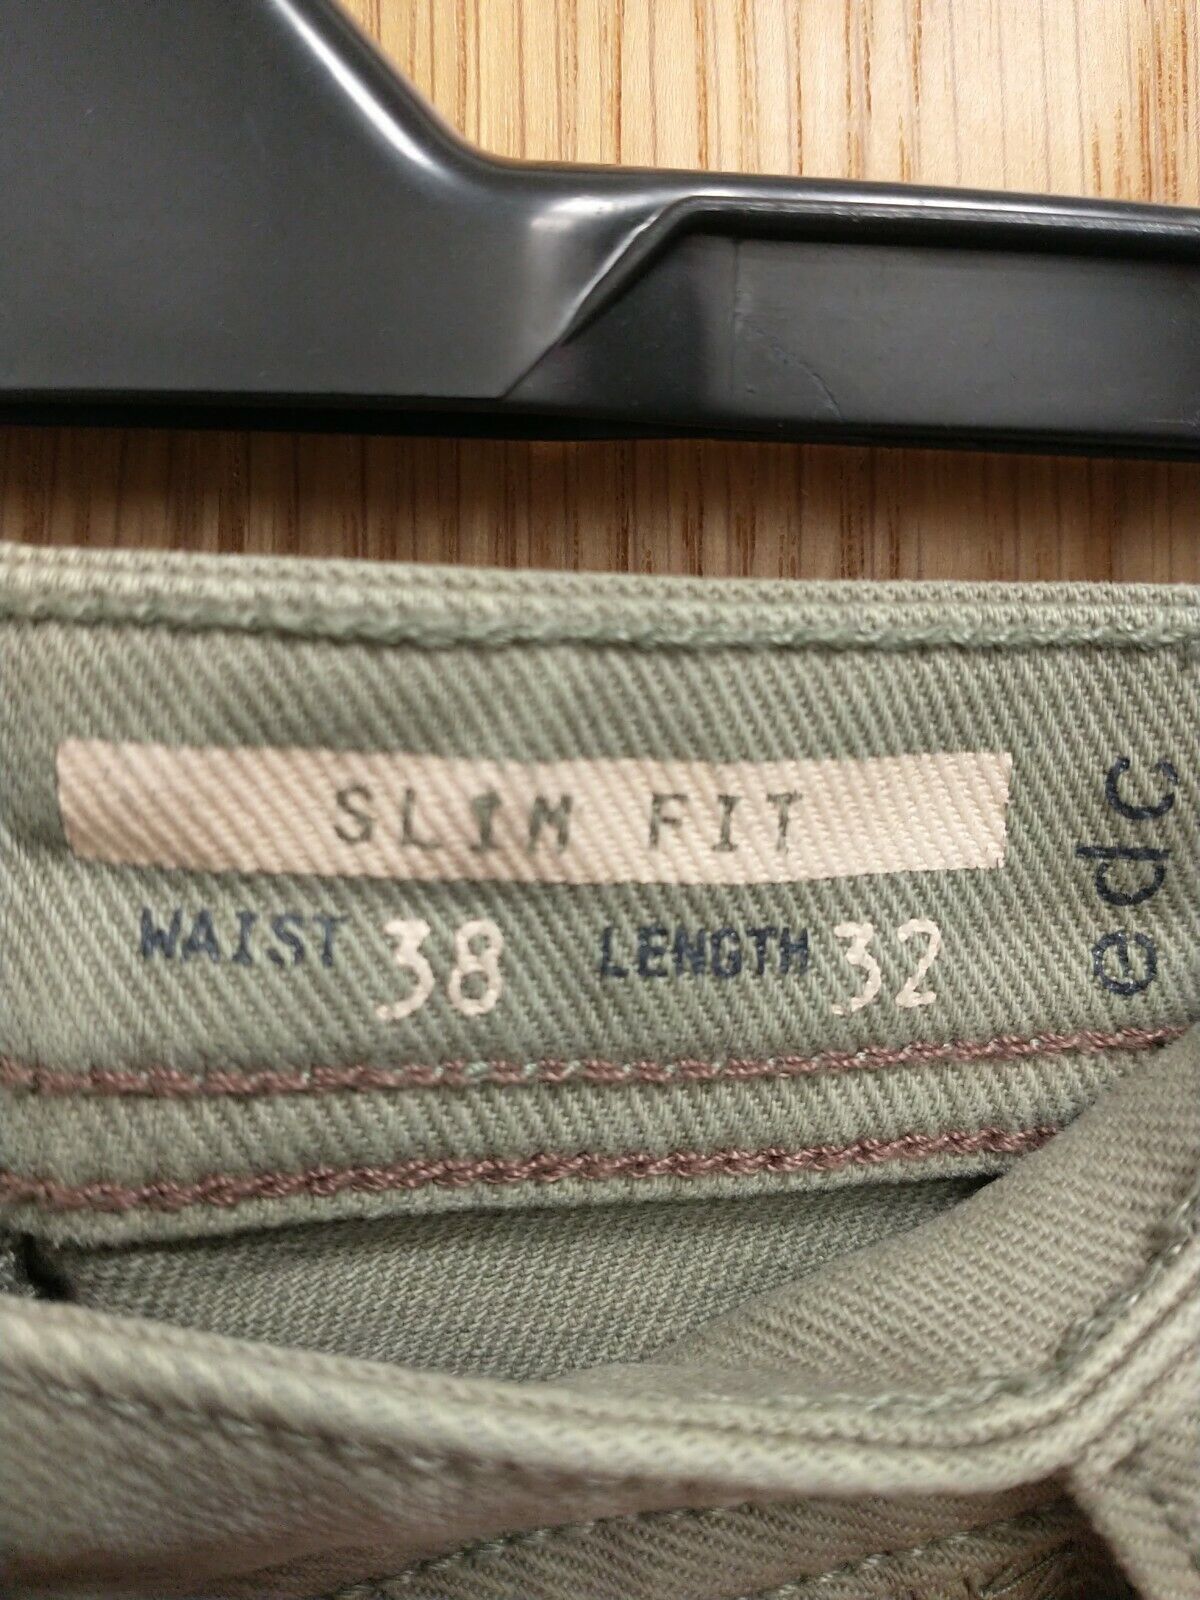 EDC Esprit Slim Fit Jeans. 38x32. Ref LB8